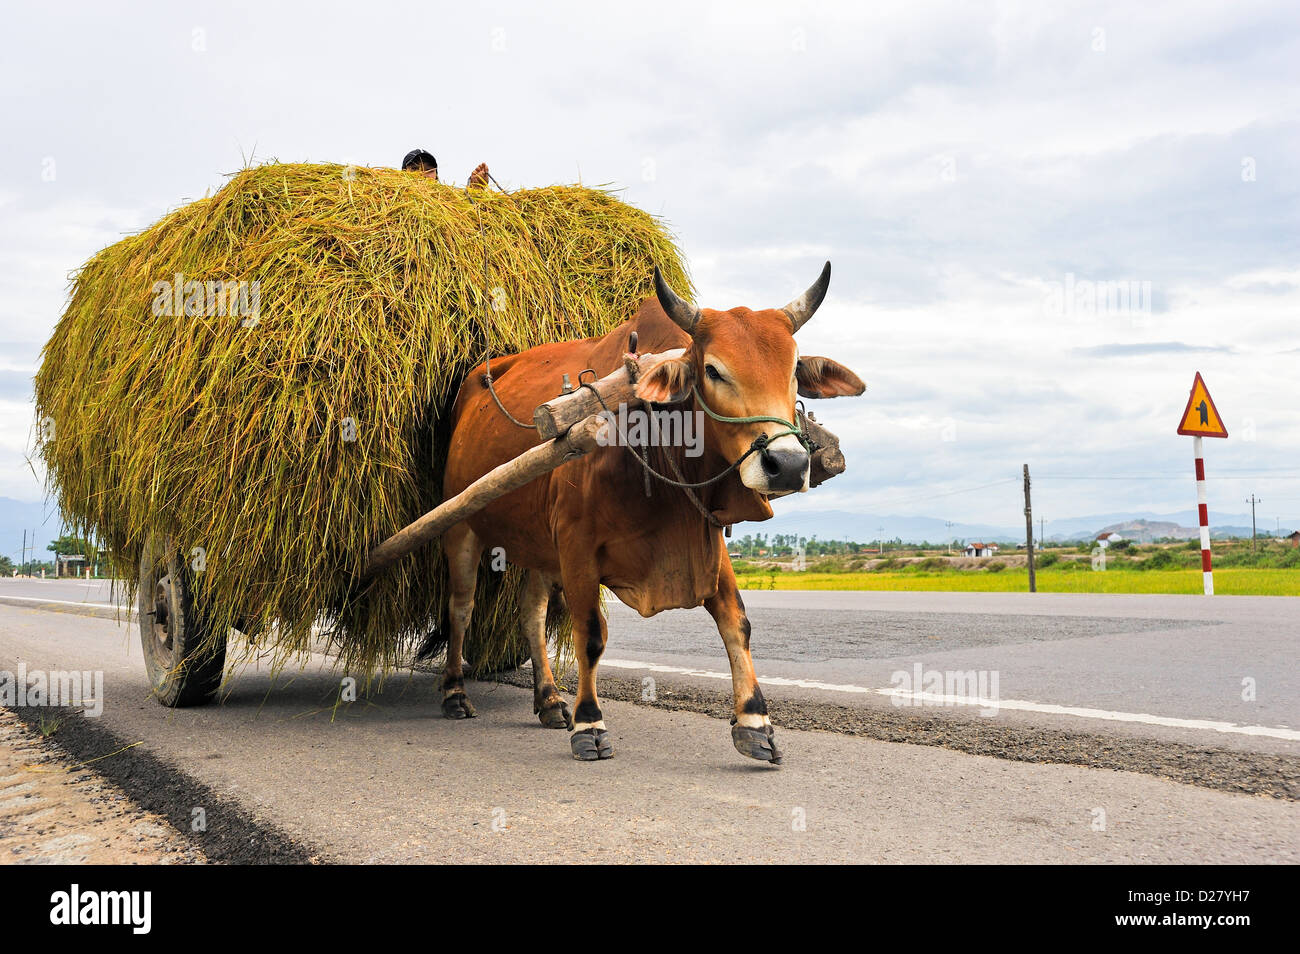 Buey tirando de un carro lleno de heno o paja en una carretera cerca de Nha Trang, Vietnam Foto de stock